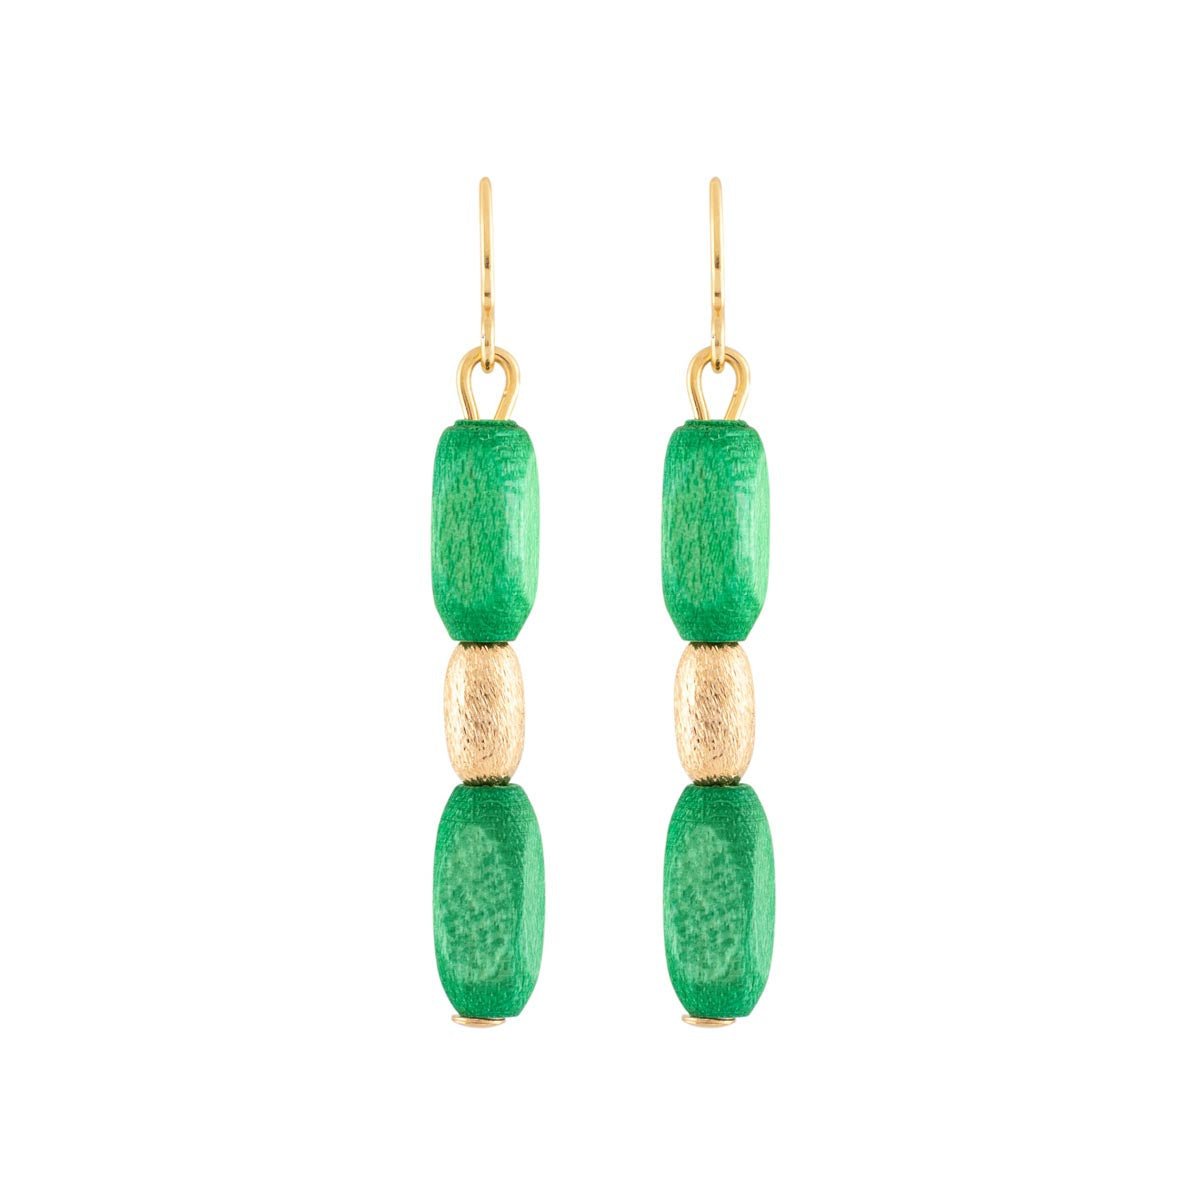 Elvira earrings, green and gold